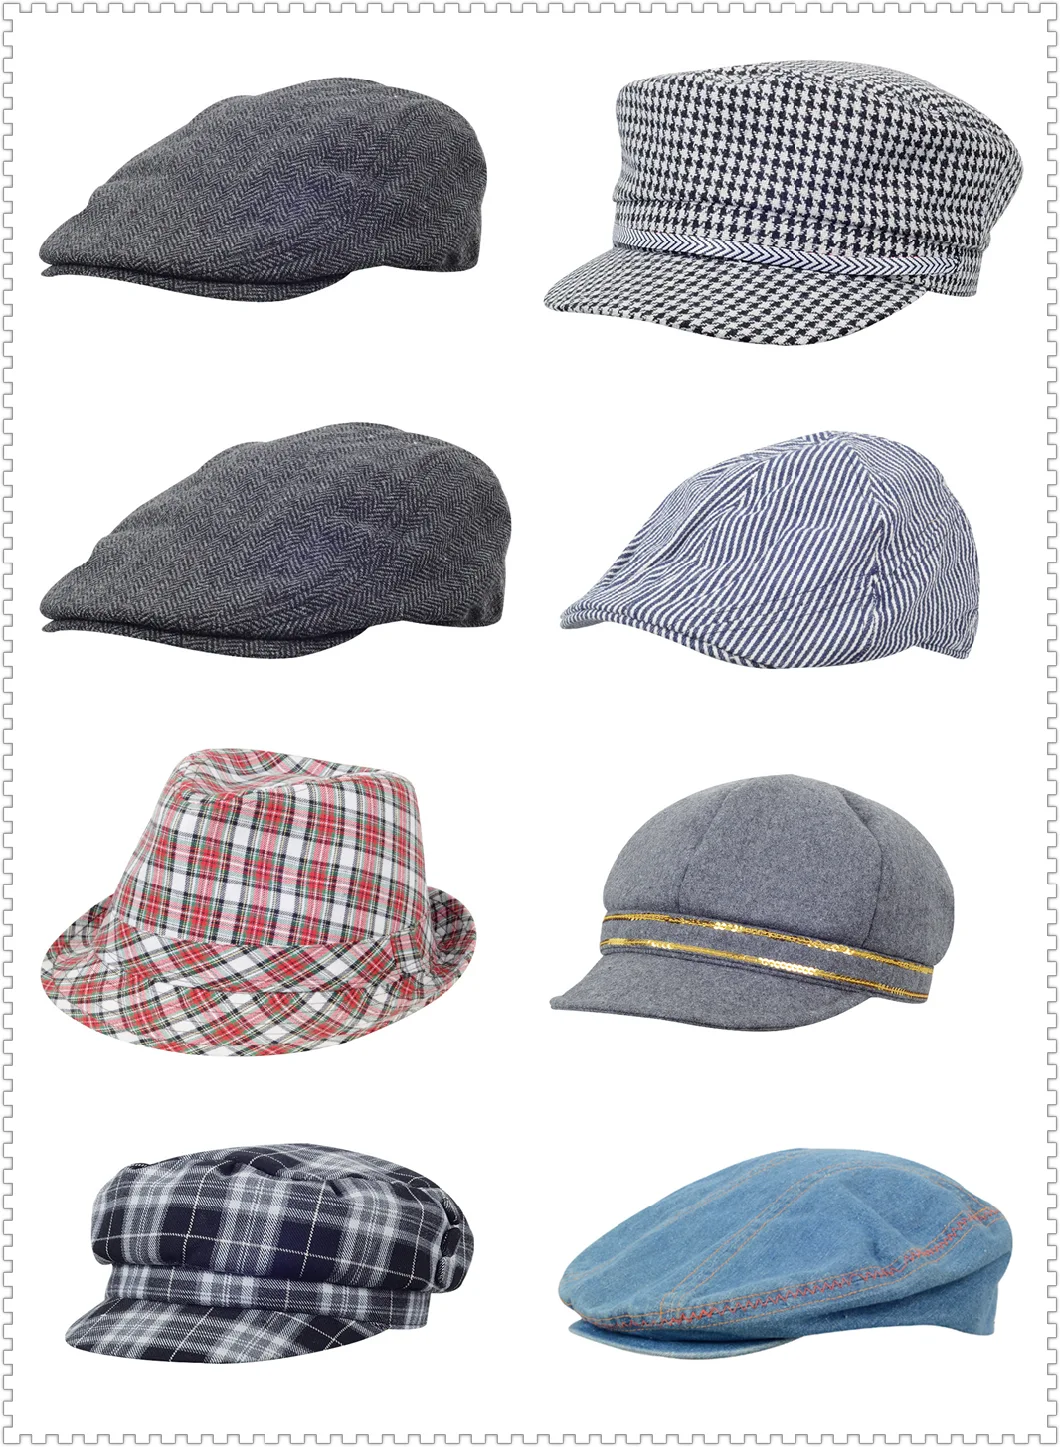 Custom Checked Cotton IVY Hat Fashion Checked Fabric IVY Cap Newsboy Cap